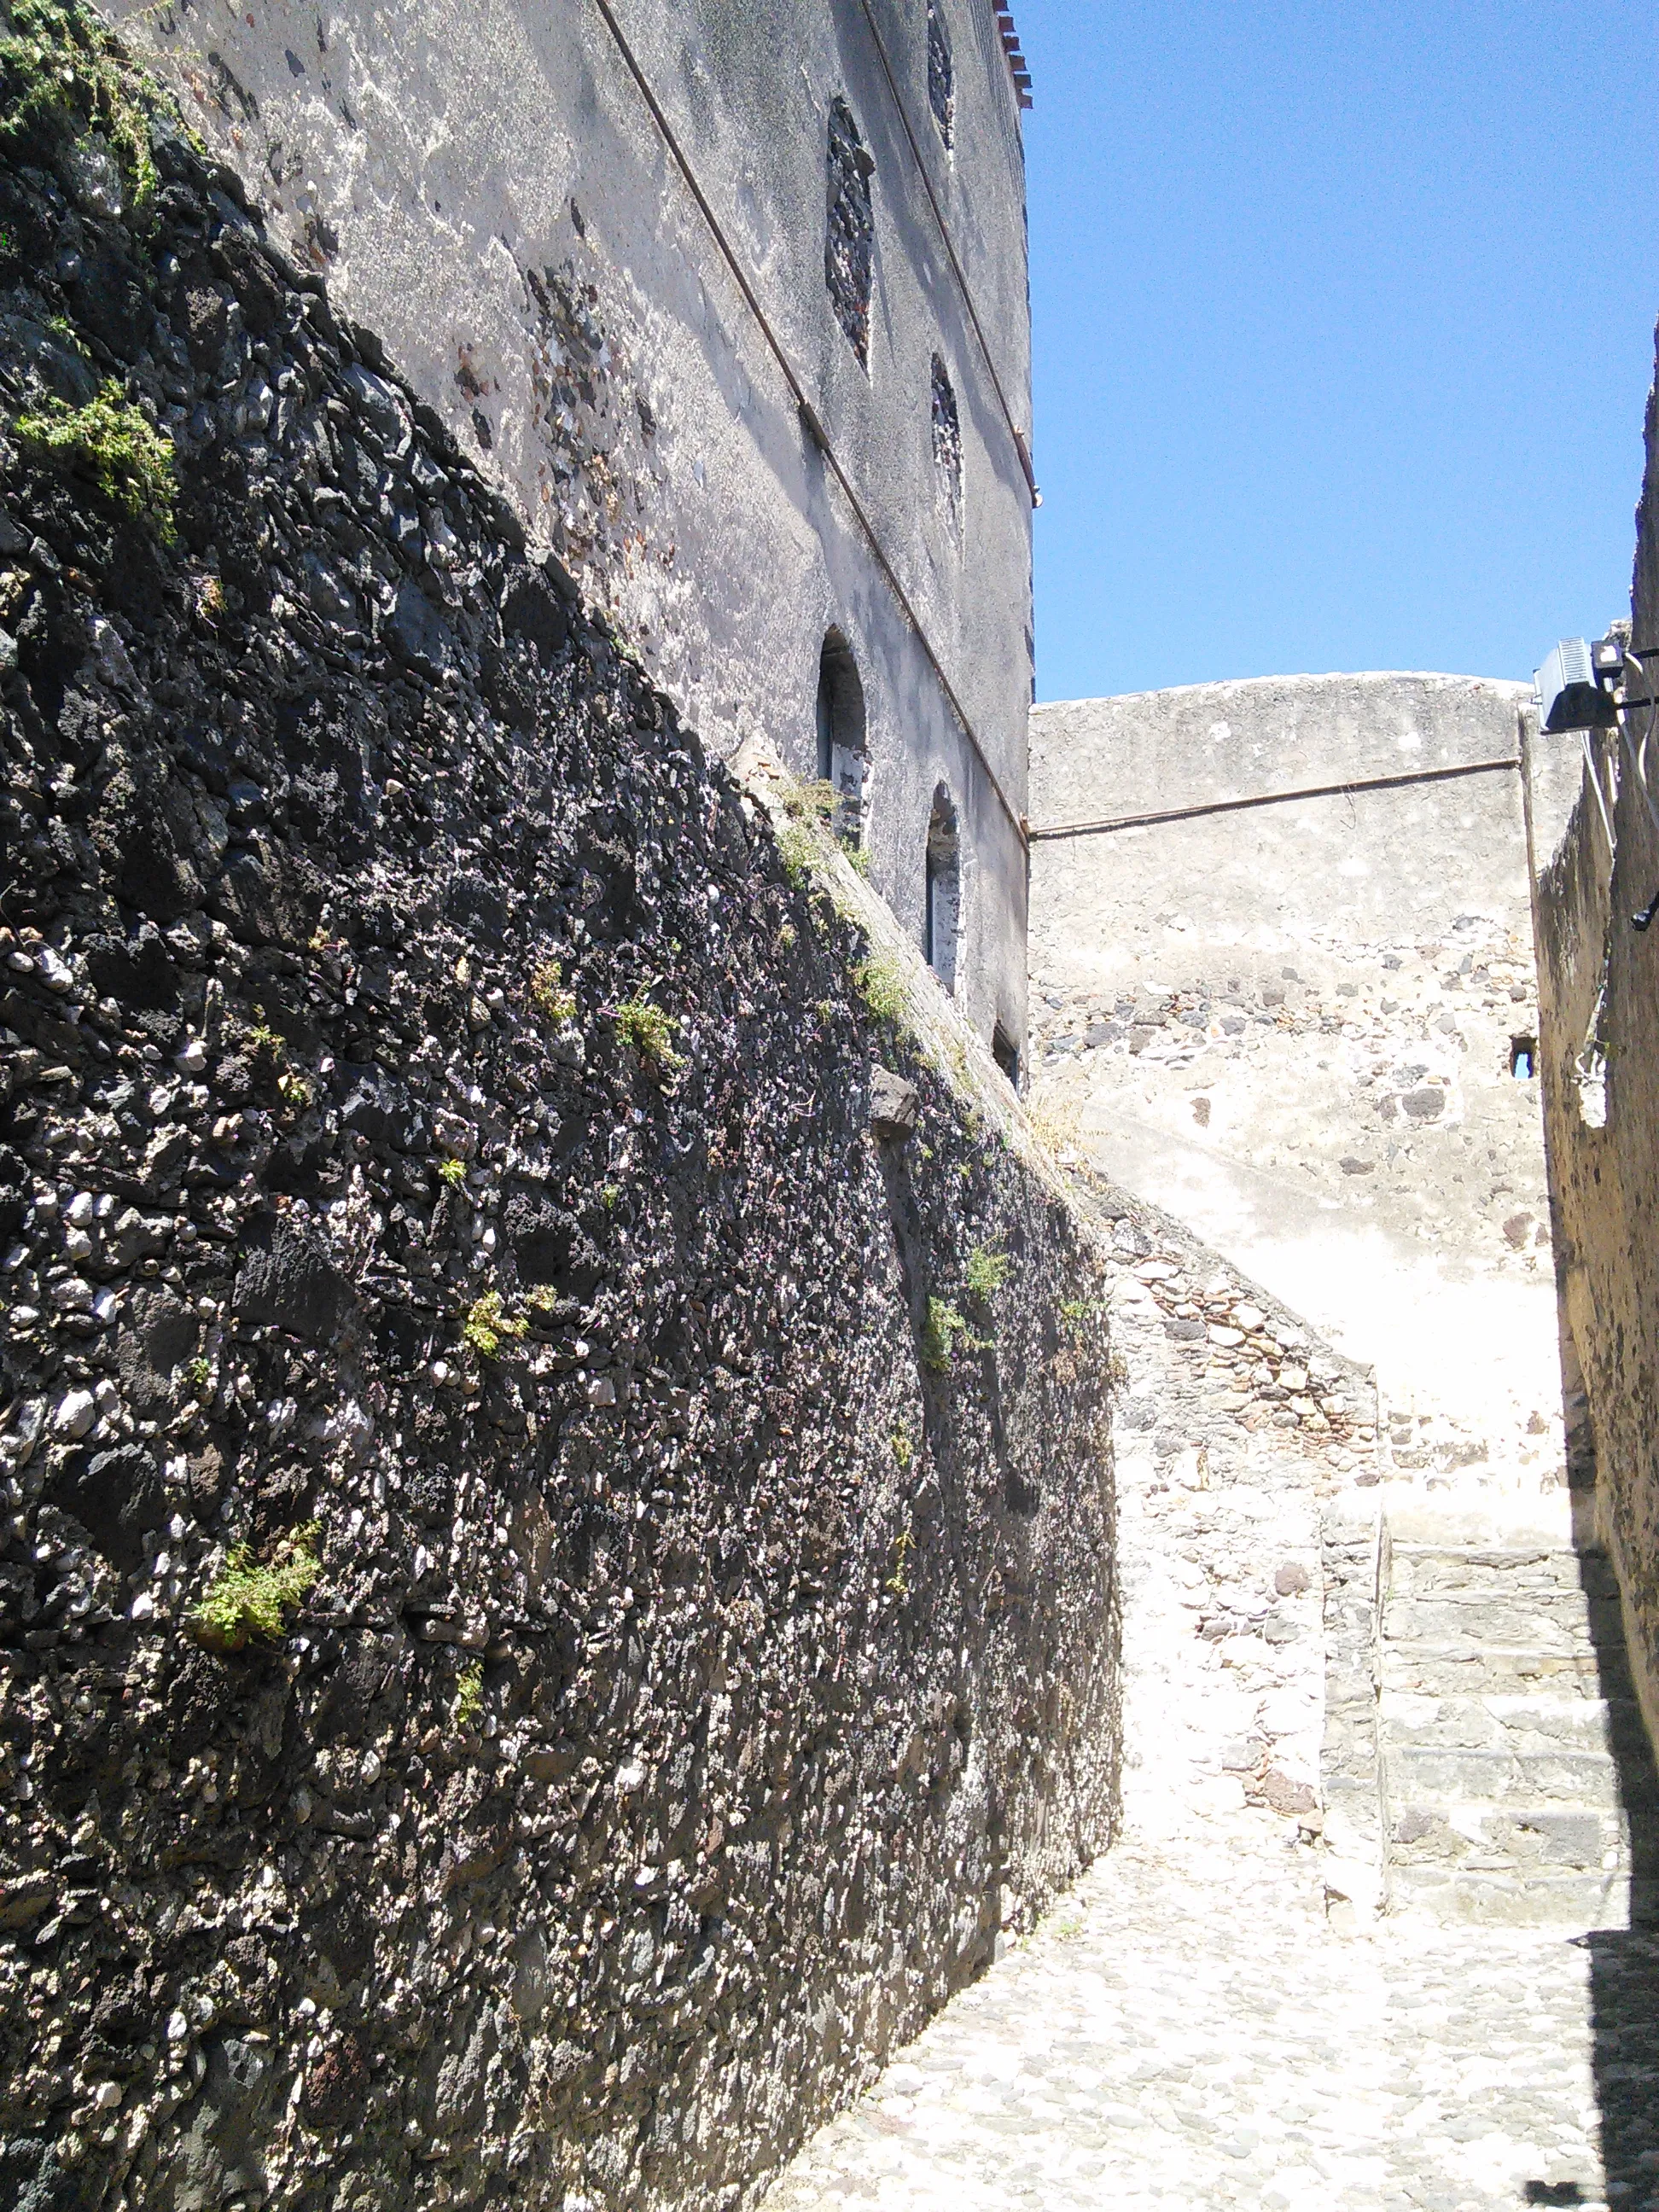 Photo showing: Prigione vecchia in Orosei, Nuoro, Italia

Stairs to first floor